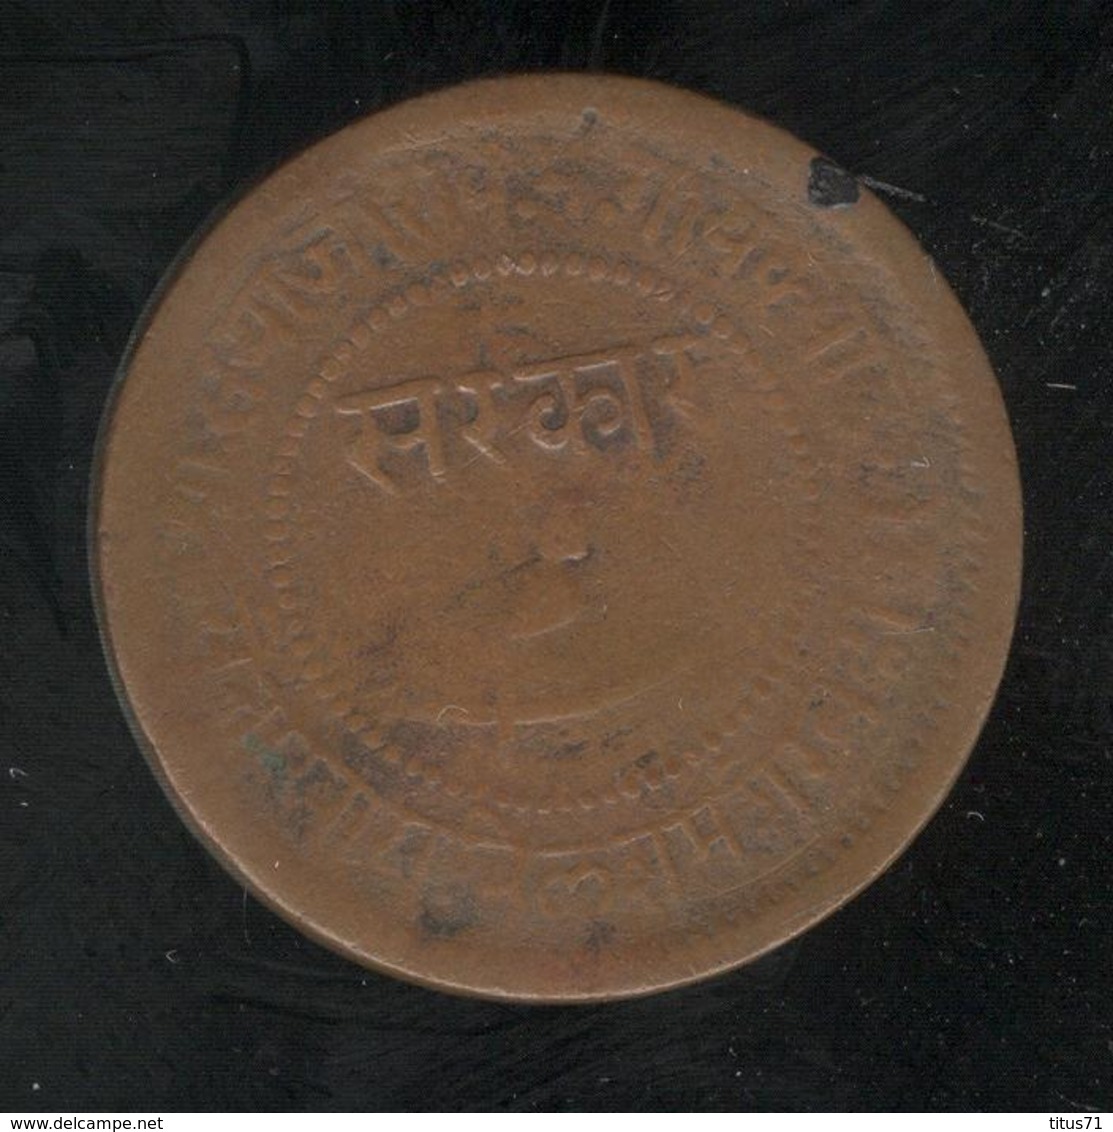 1 Paisa Baroda 1884-1895 - Etats Princiers Indiens / Indian Princely States - India